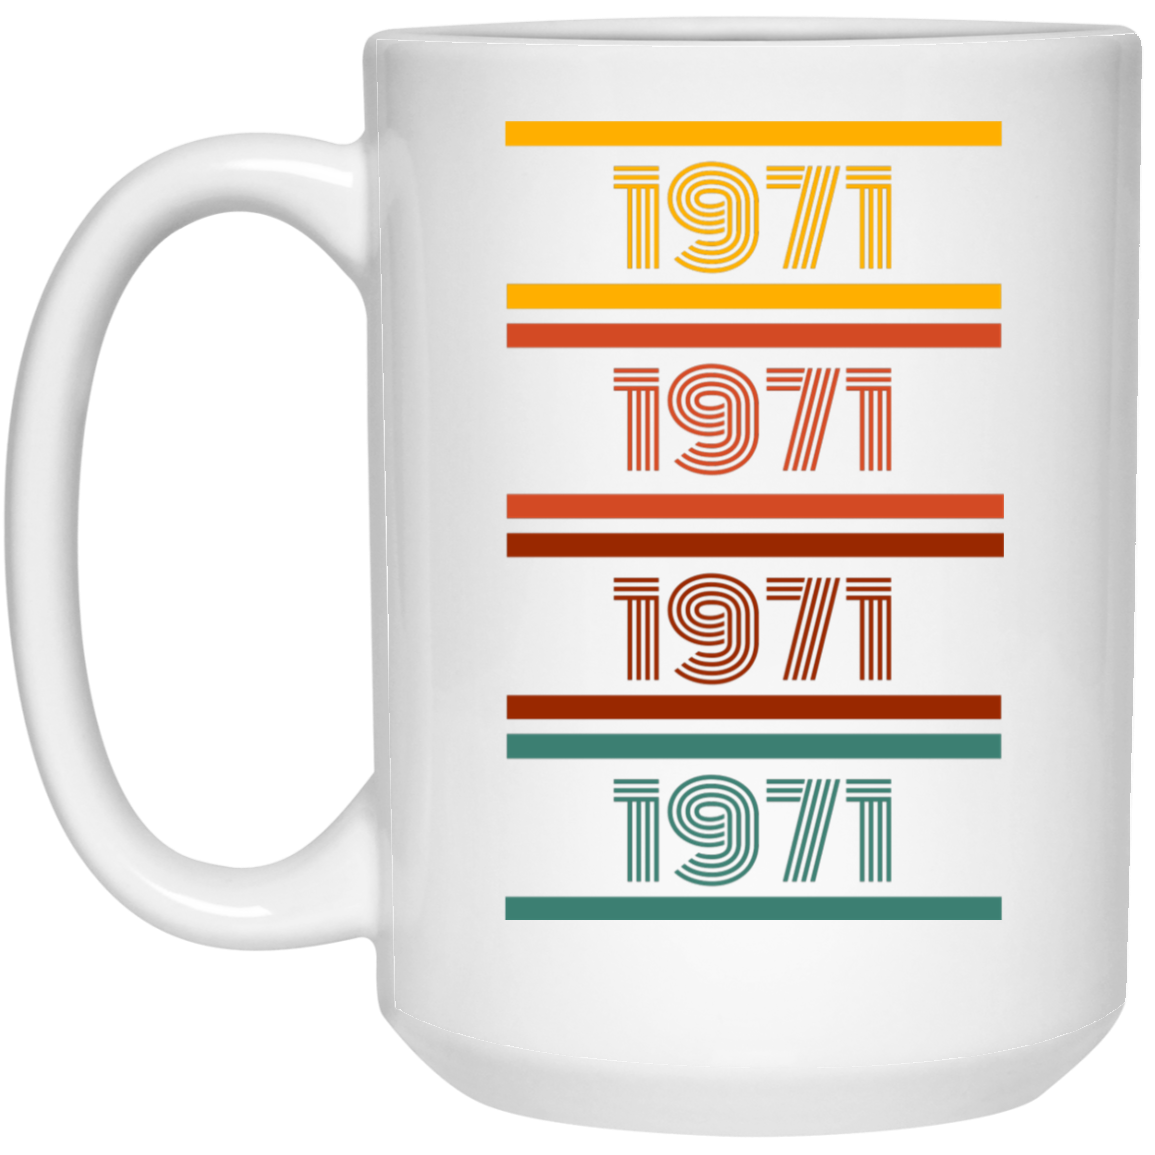 1971 15 oz. White Mug